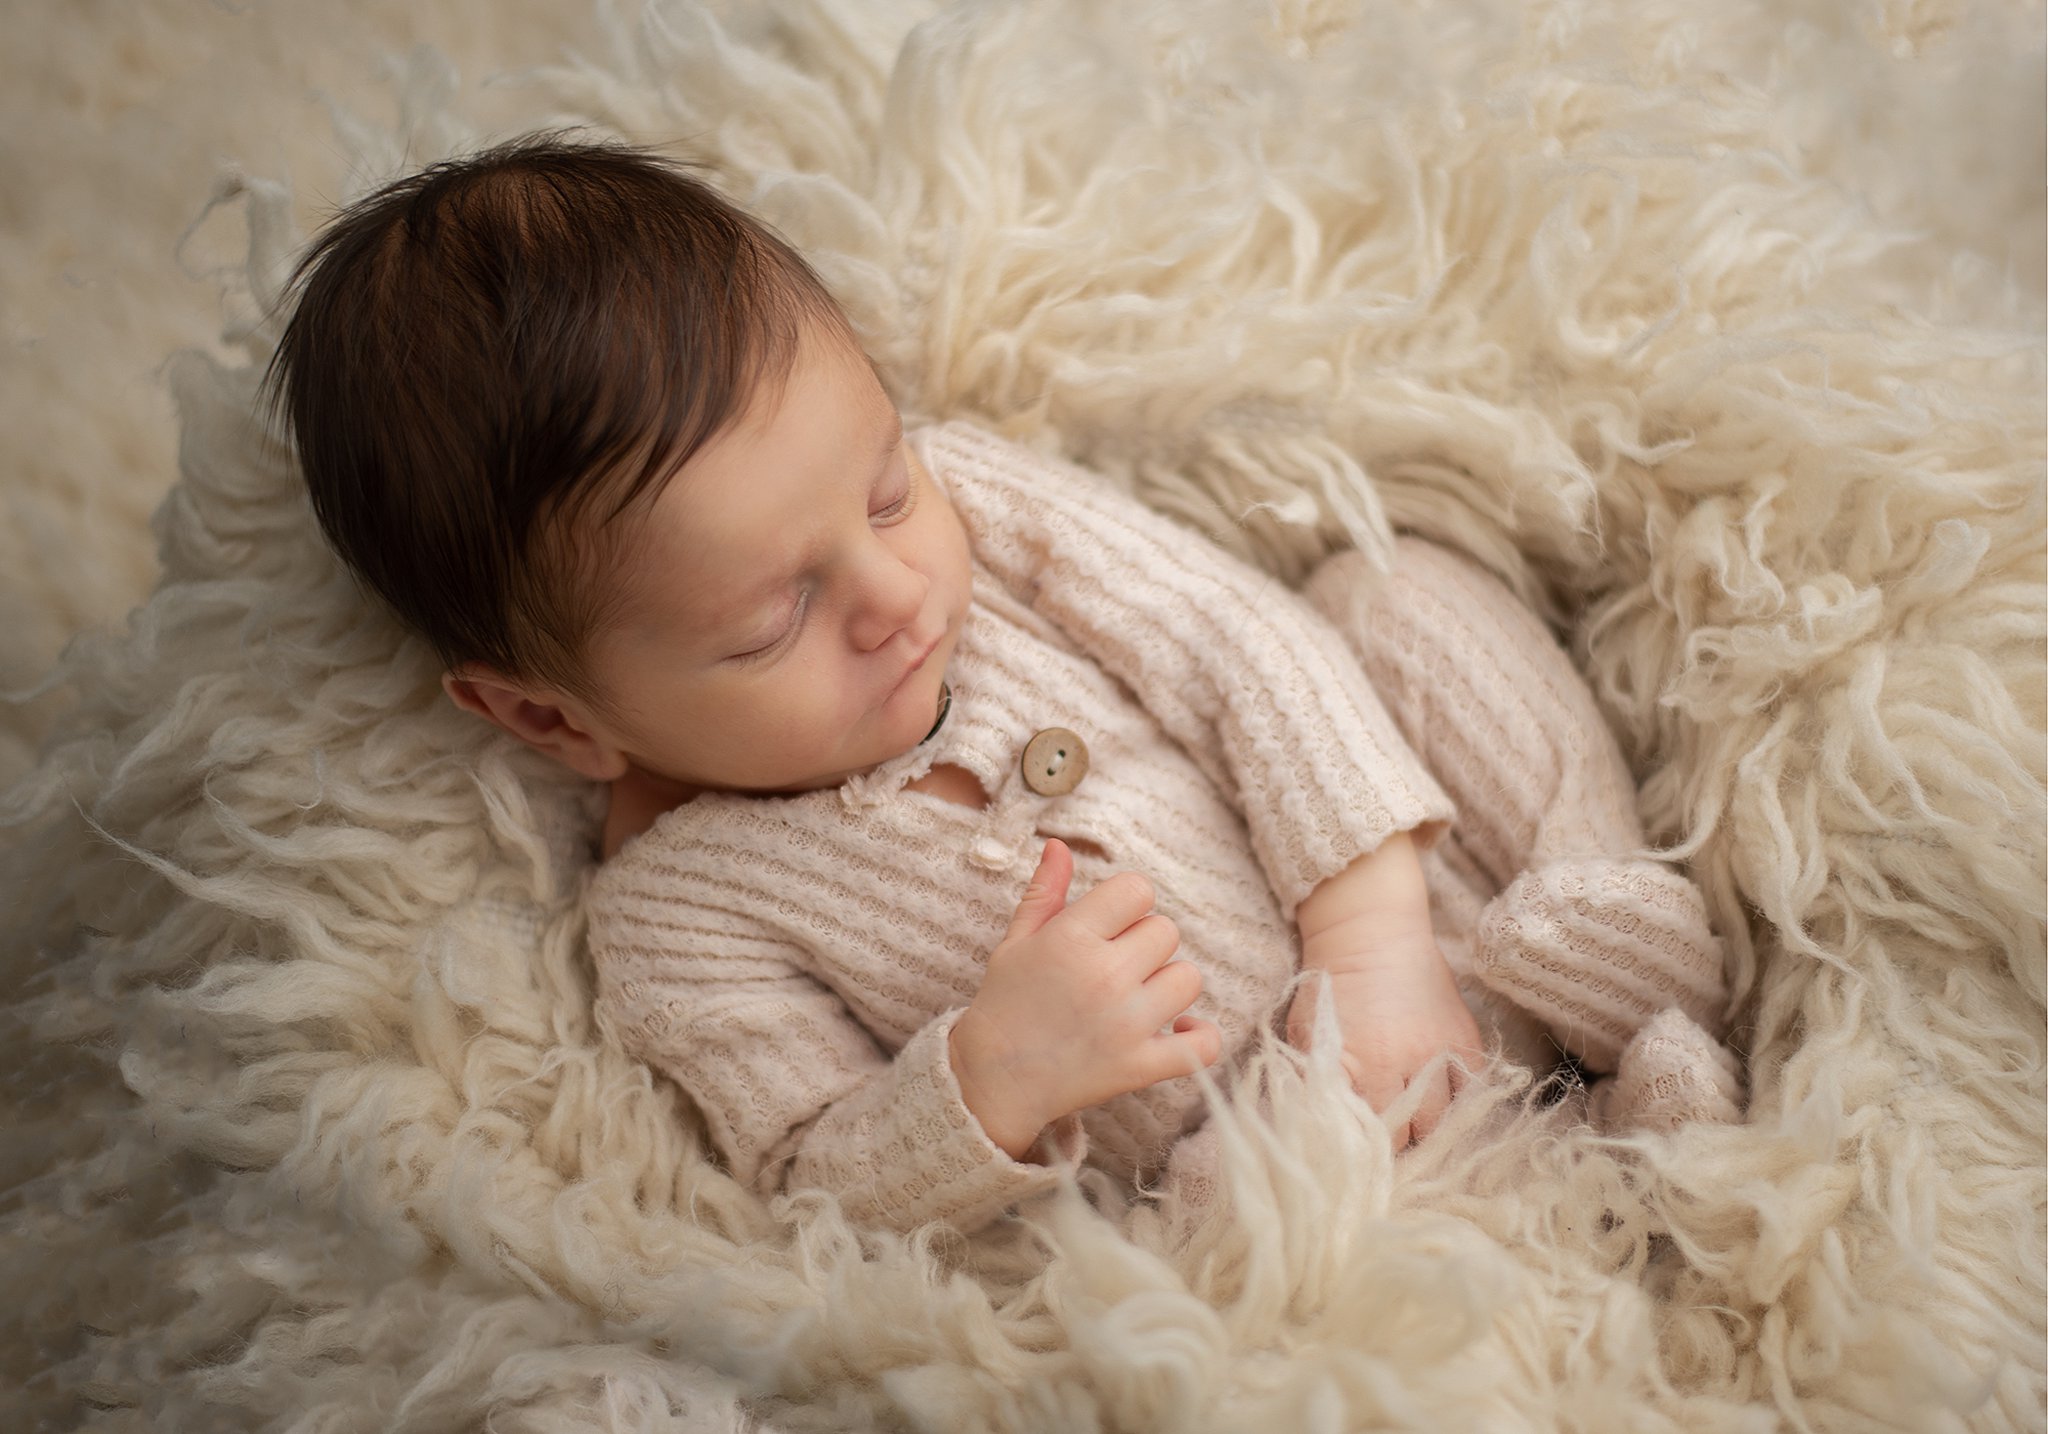 A newborn baby sleeps in a bed of fur in a knit onesie